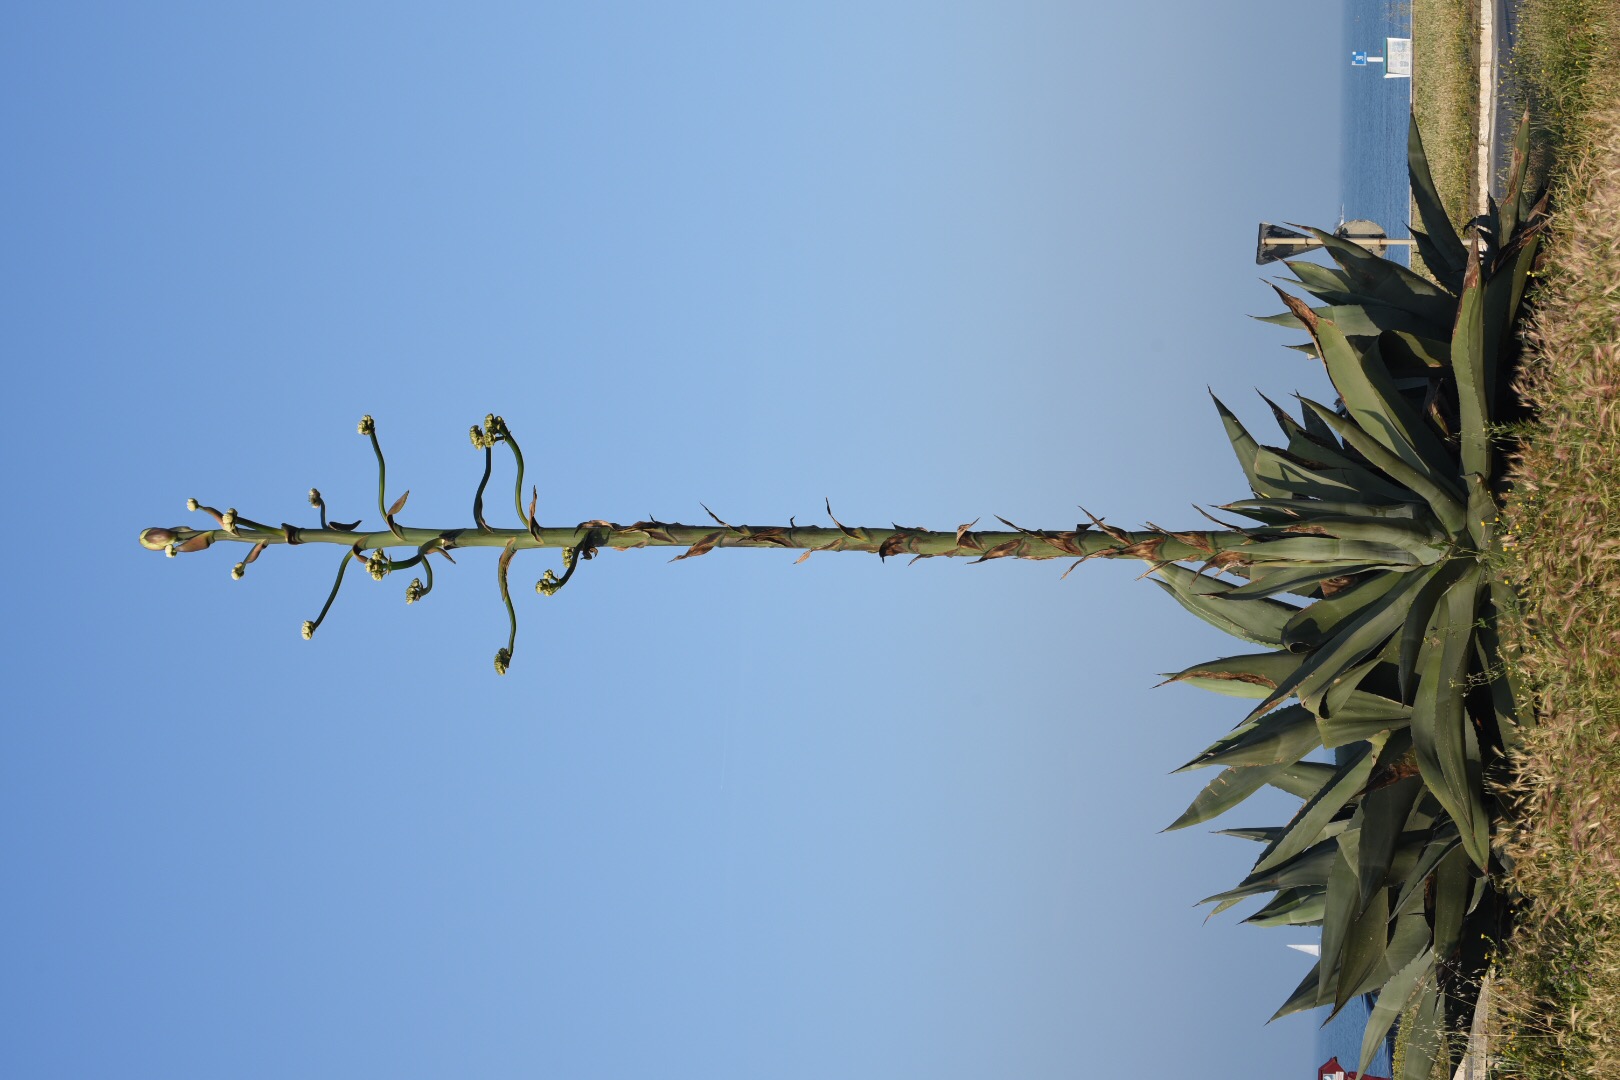 L’agave in fiore